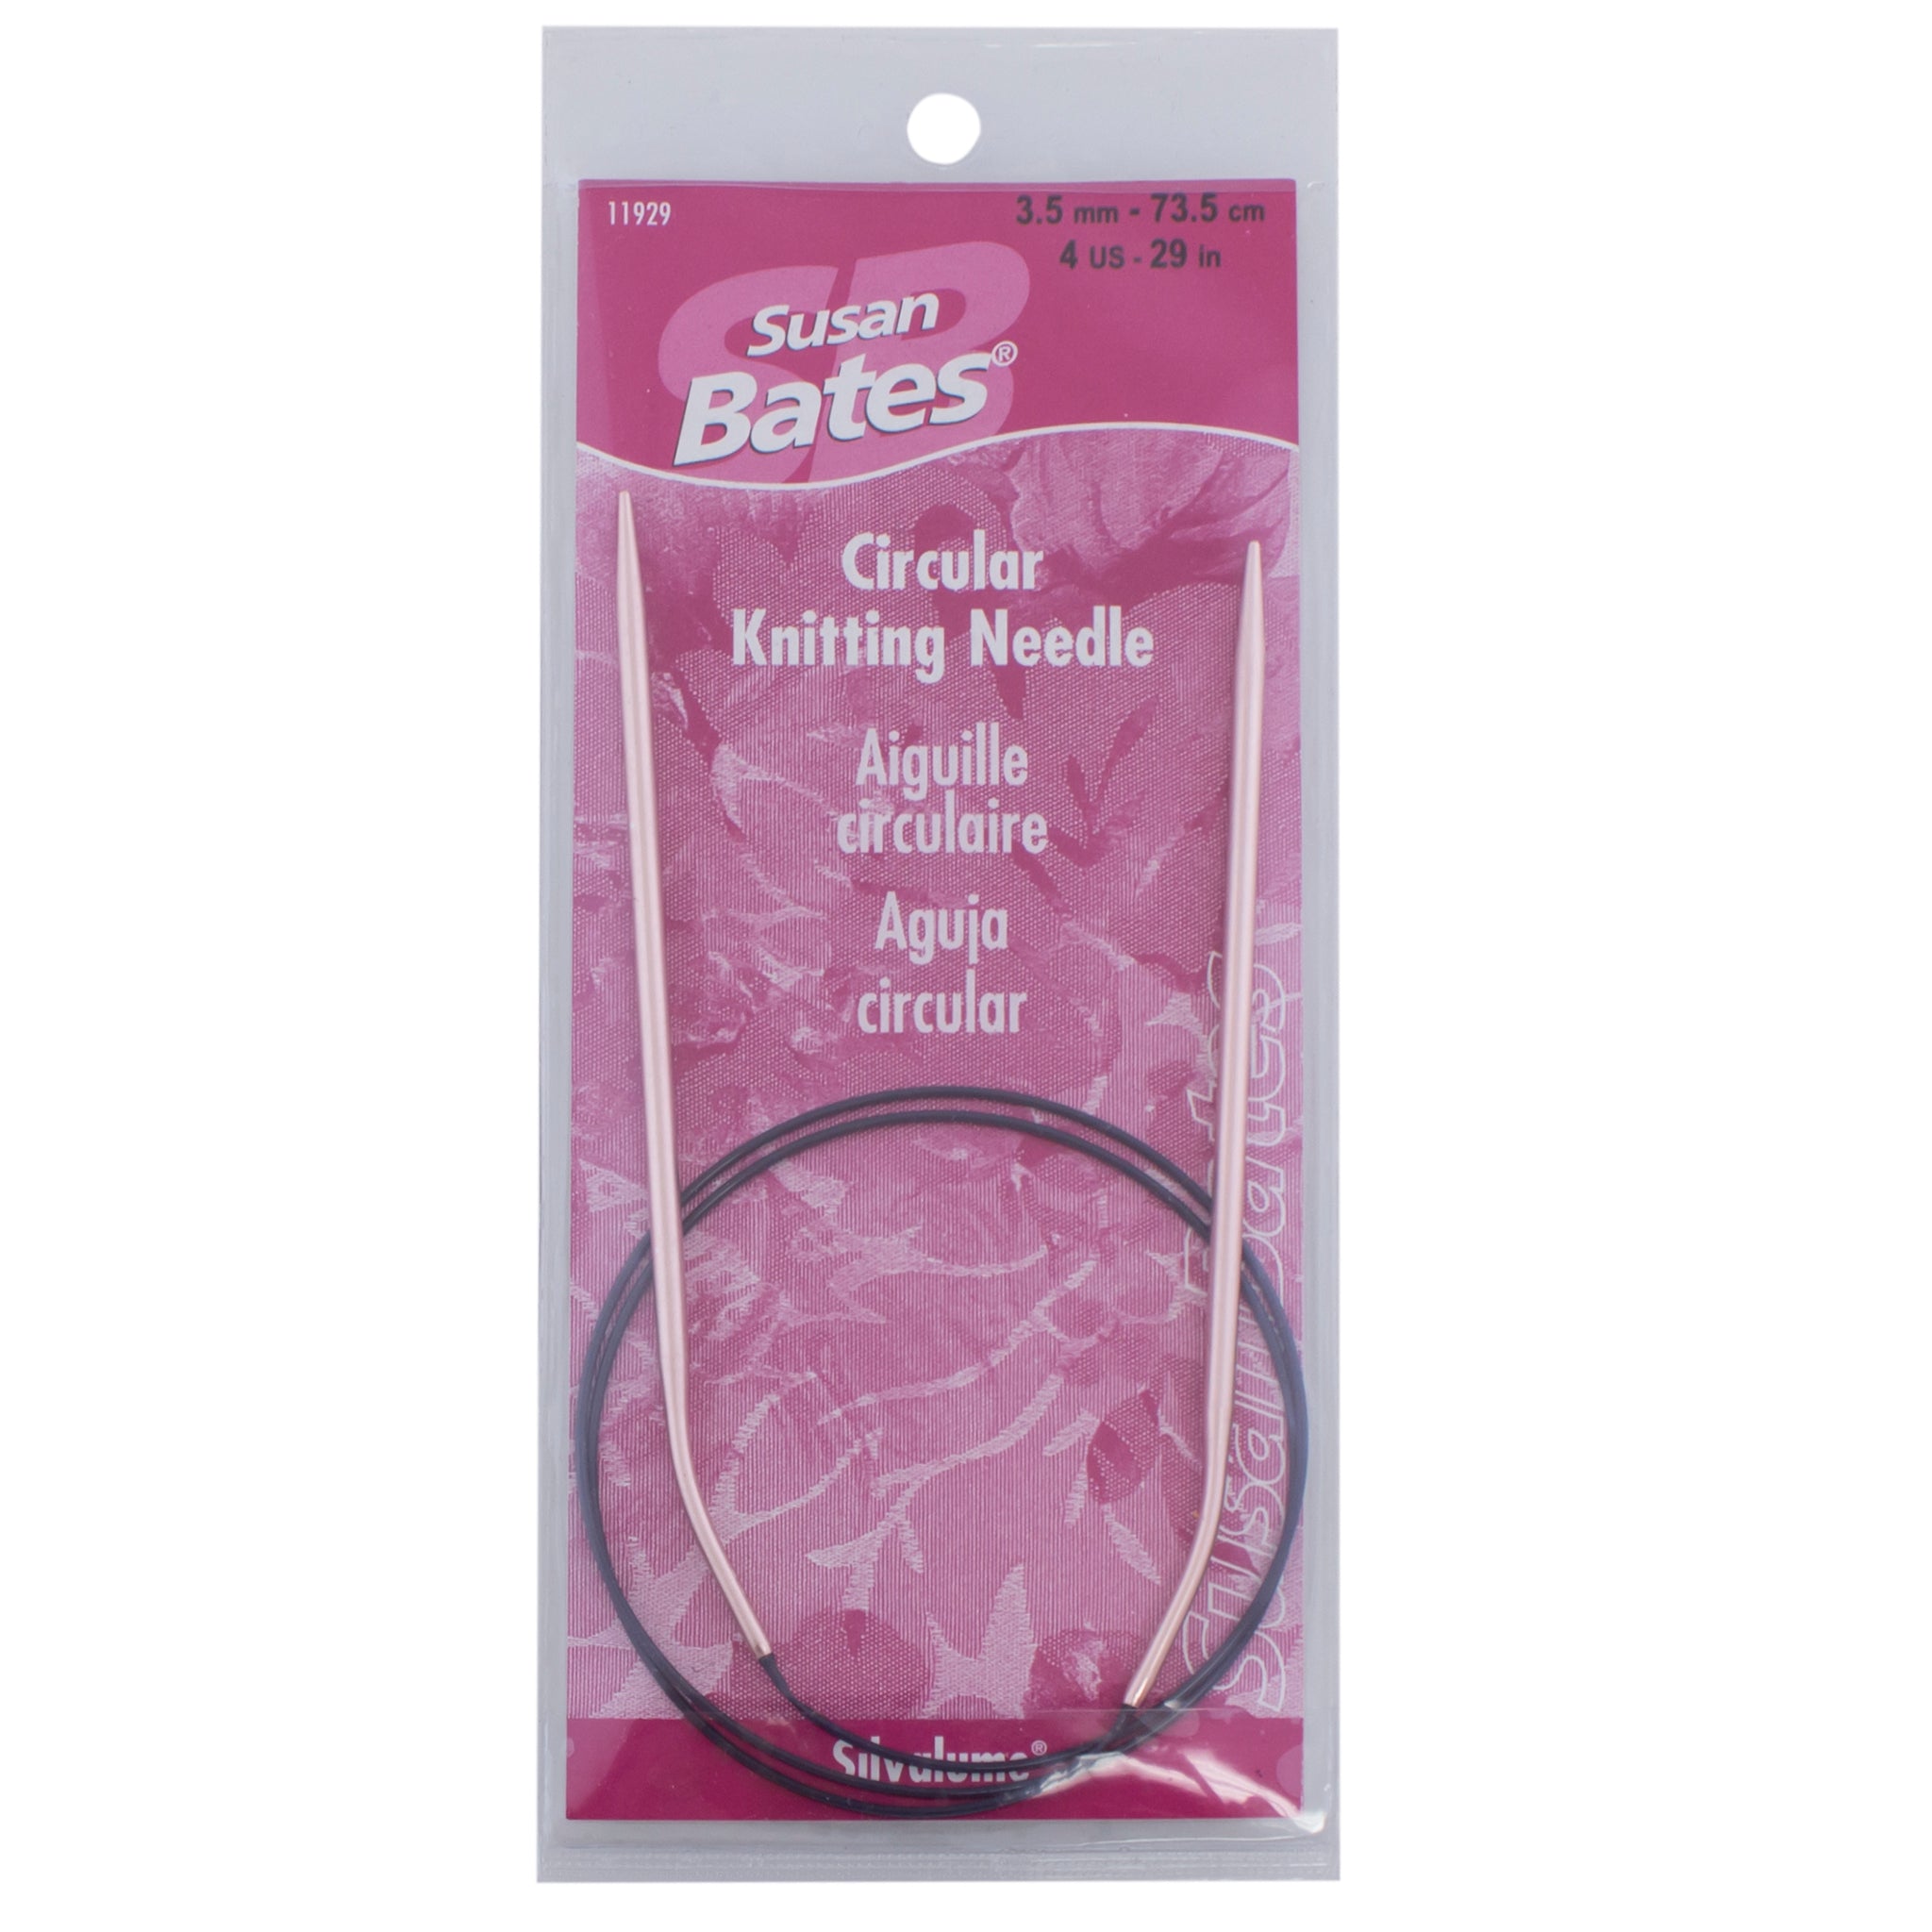 3Pcs Knitting Needles Knitting Tool Stainless Steel Circular Flexible Sock  Knitting Needles